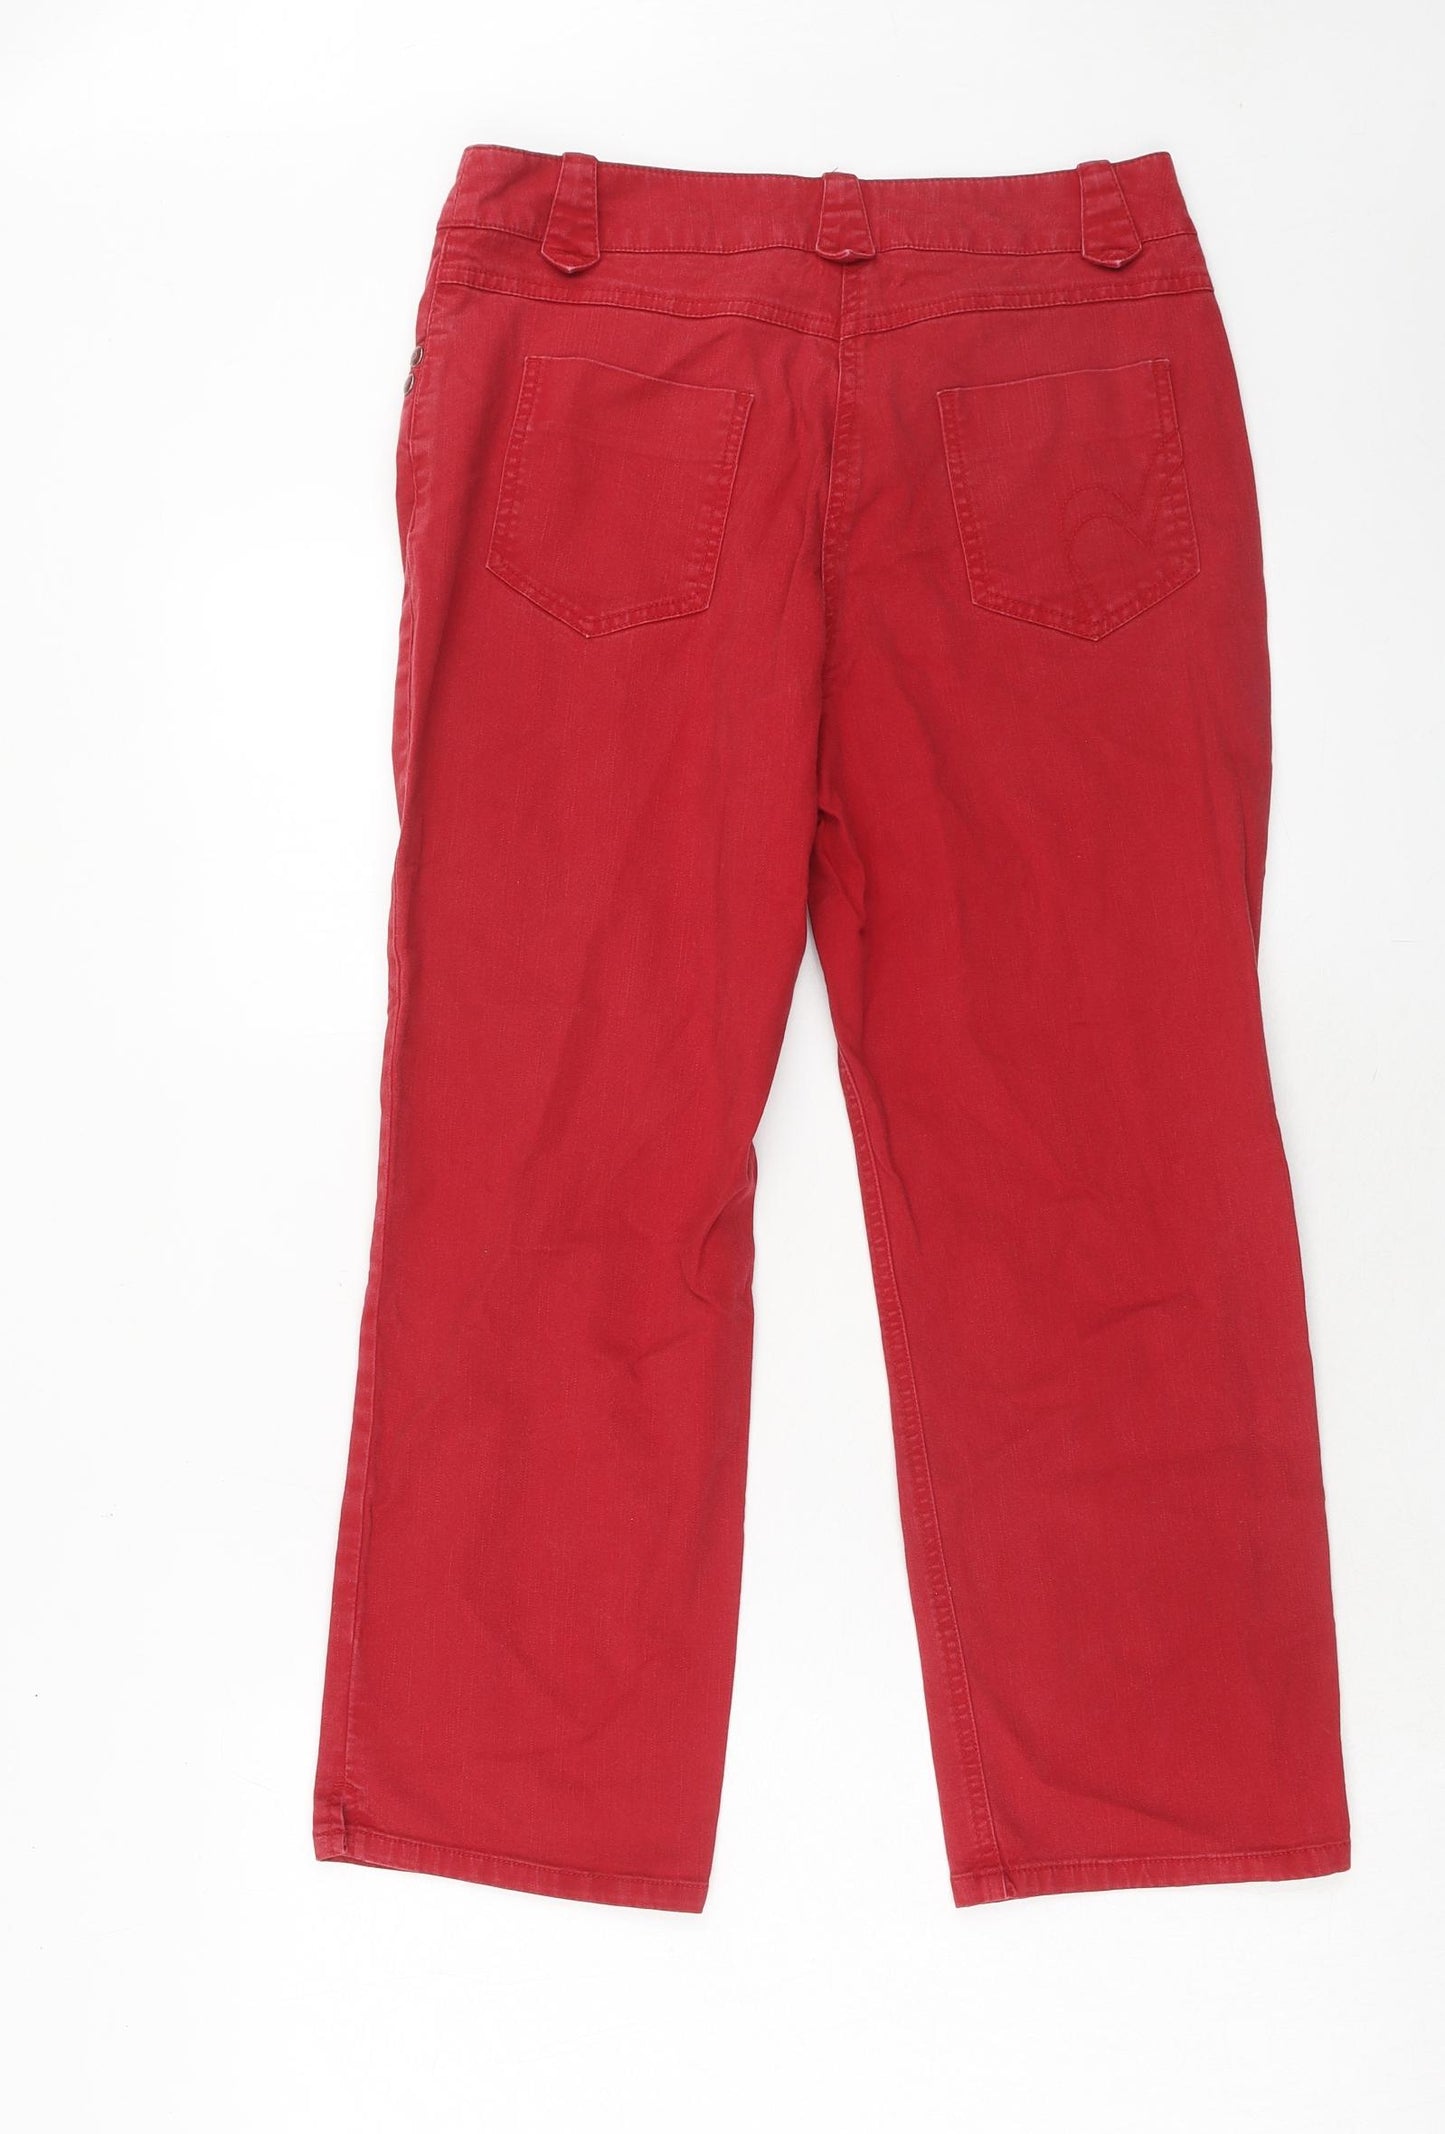 Per Una Womens Red Cotton Straight Jeans Size 10 Regular Zip